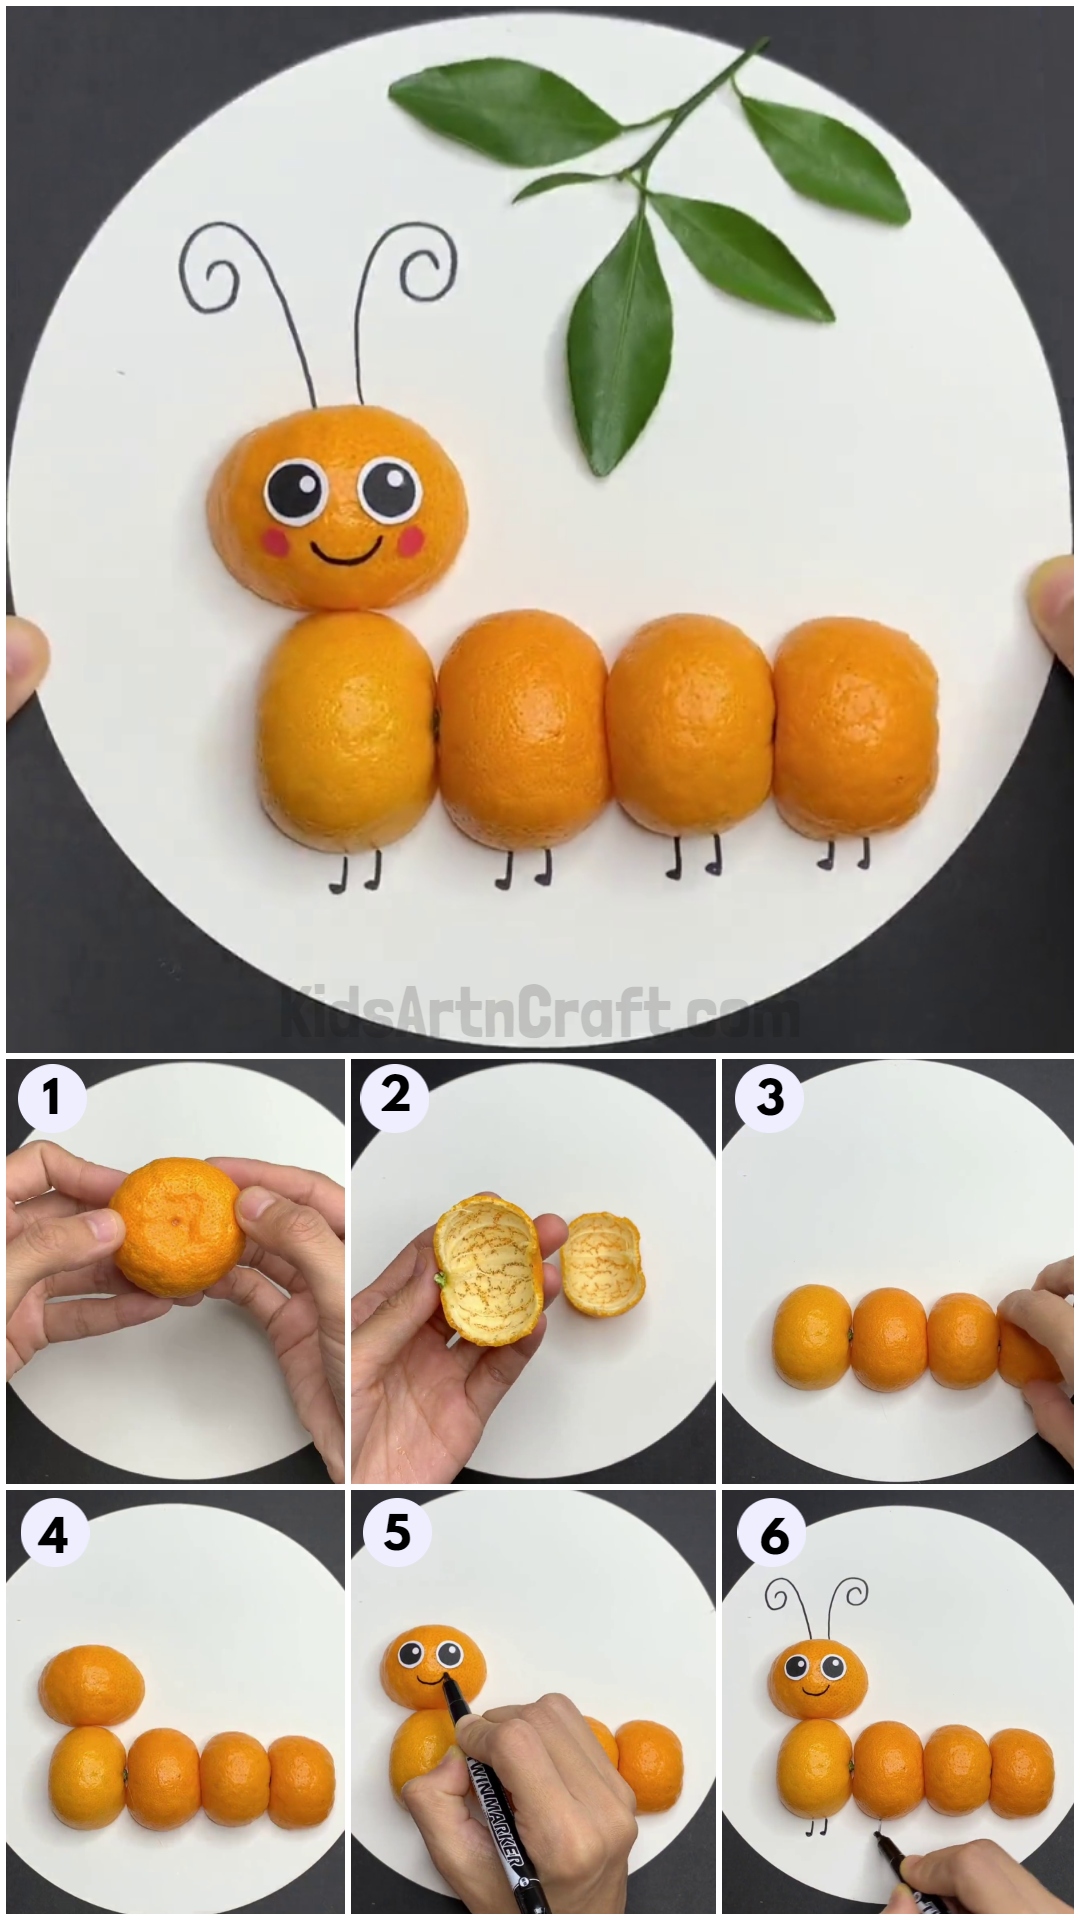 How To Make Orange Peels caterpillar craft